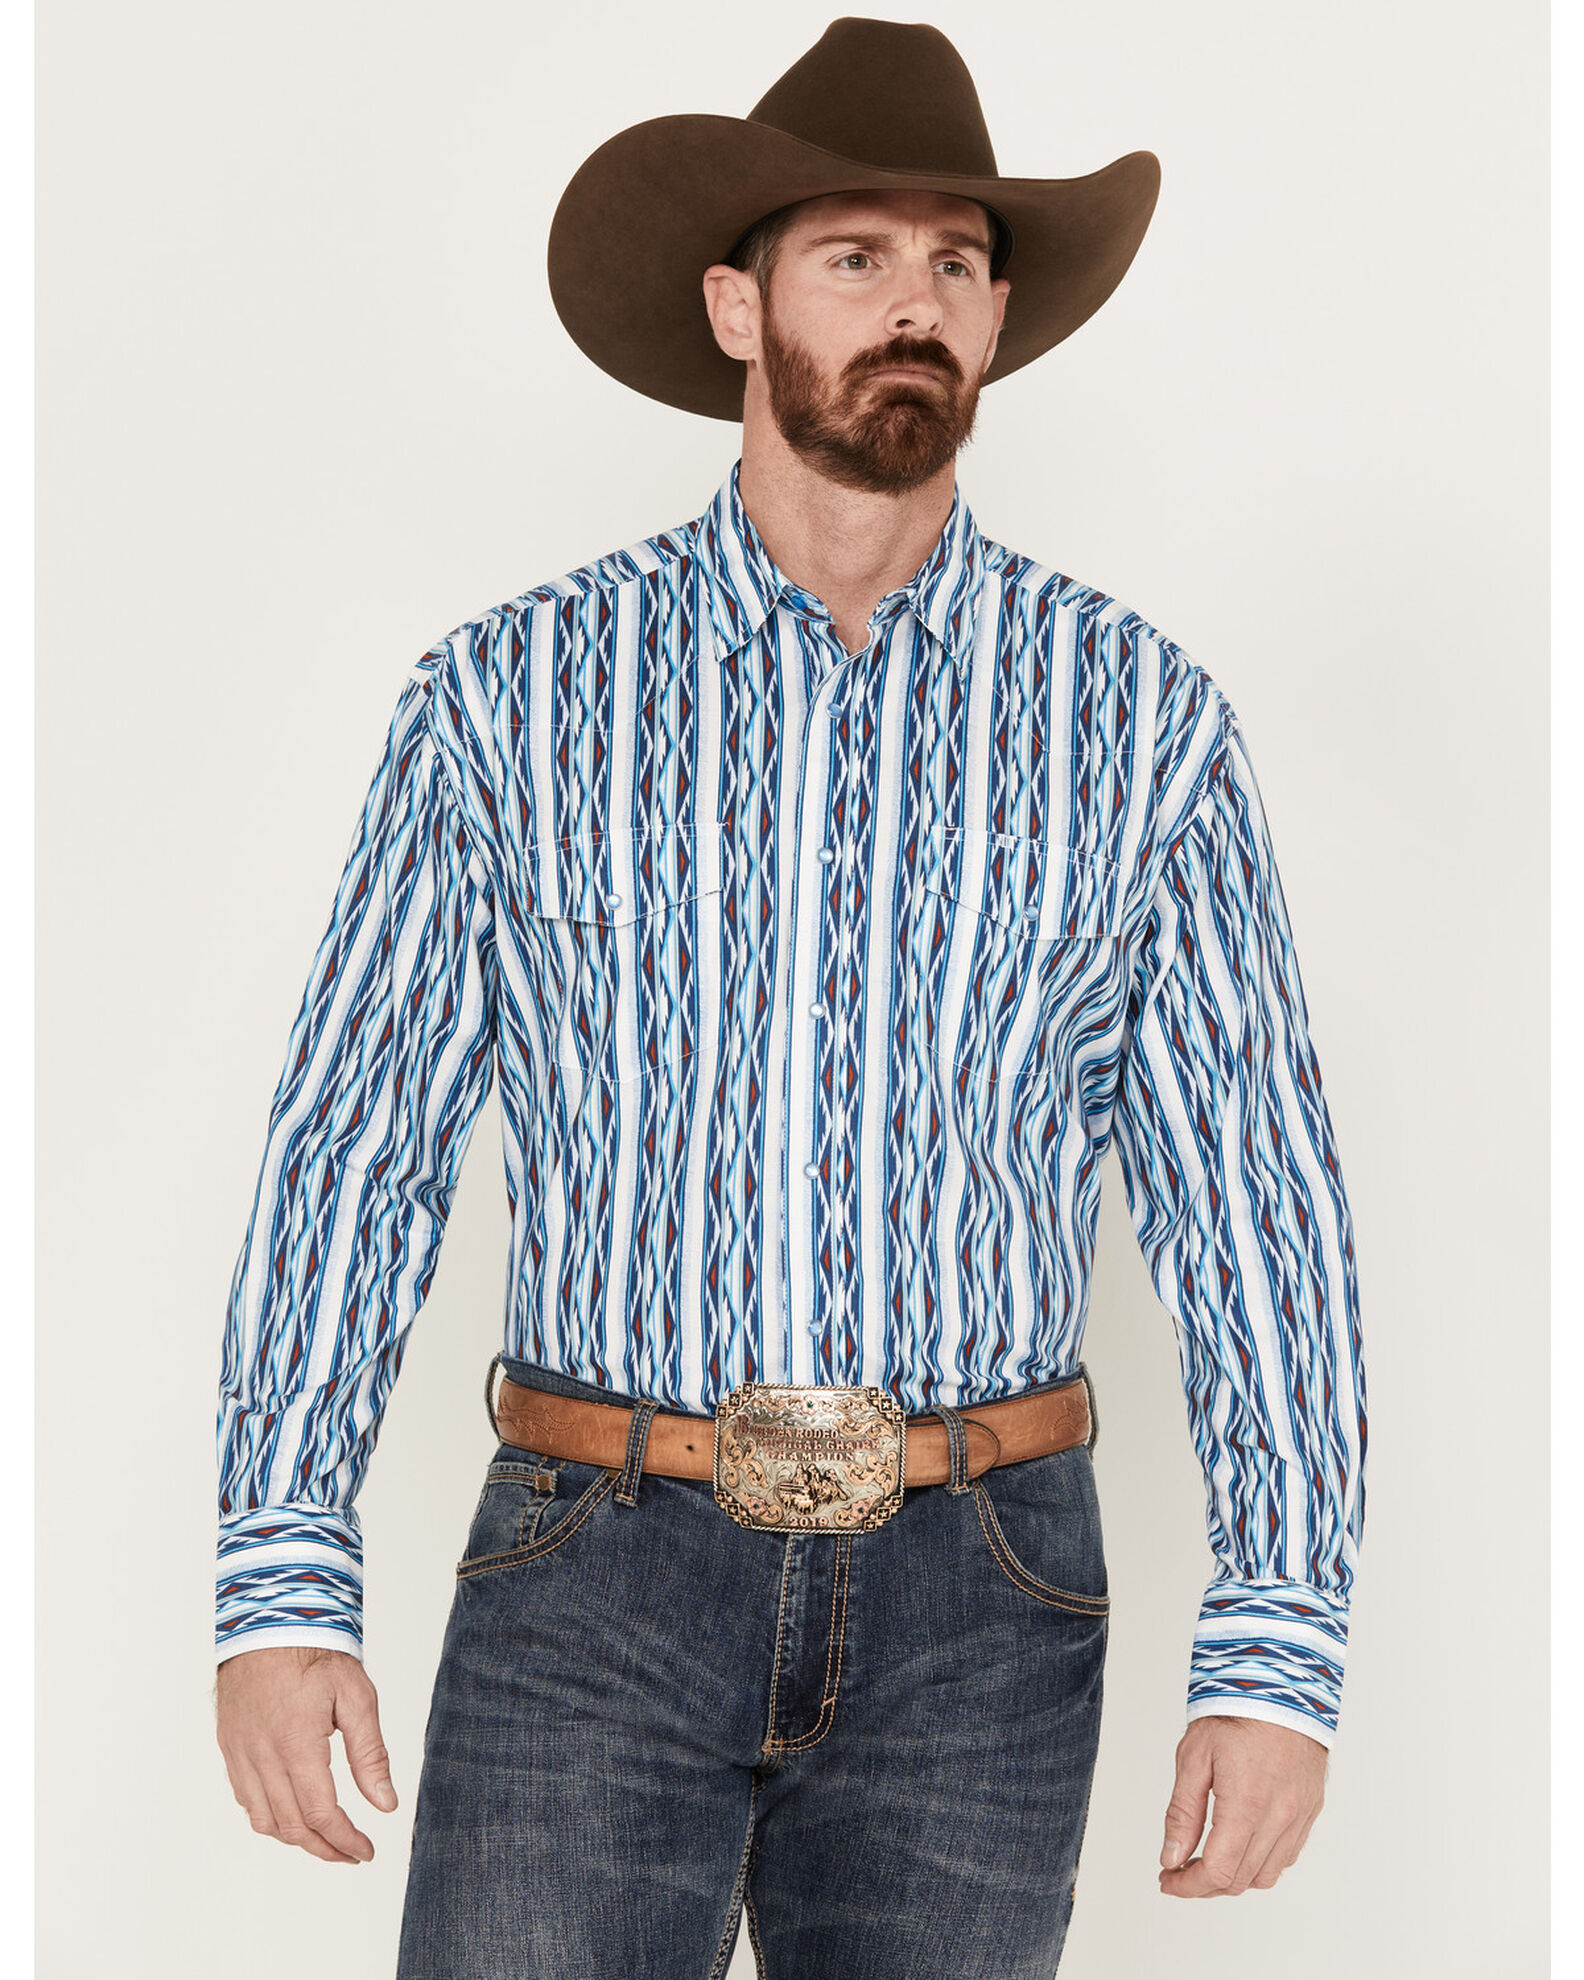 Product Name: Wrangler Men's Checotah Long Sleeve Western Pearl Snap Shirt